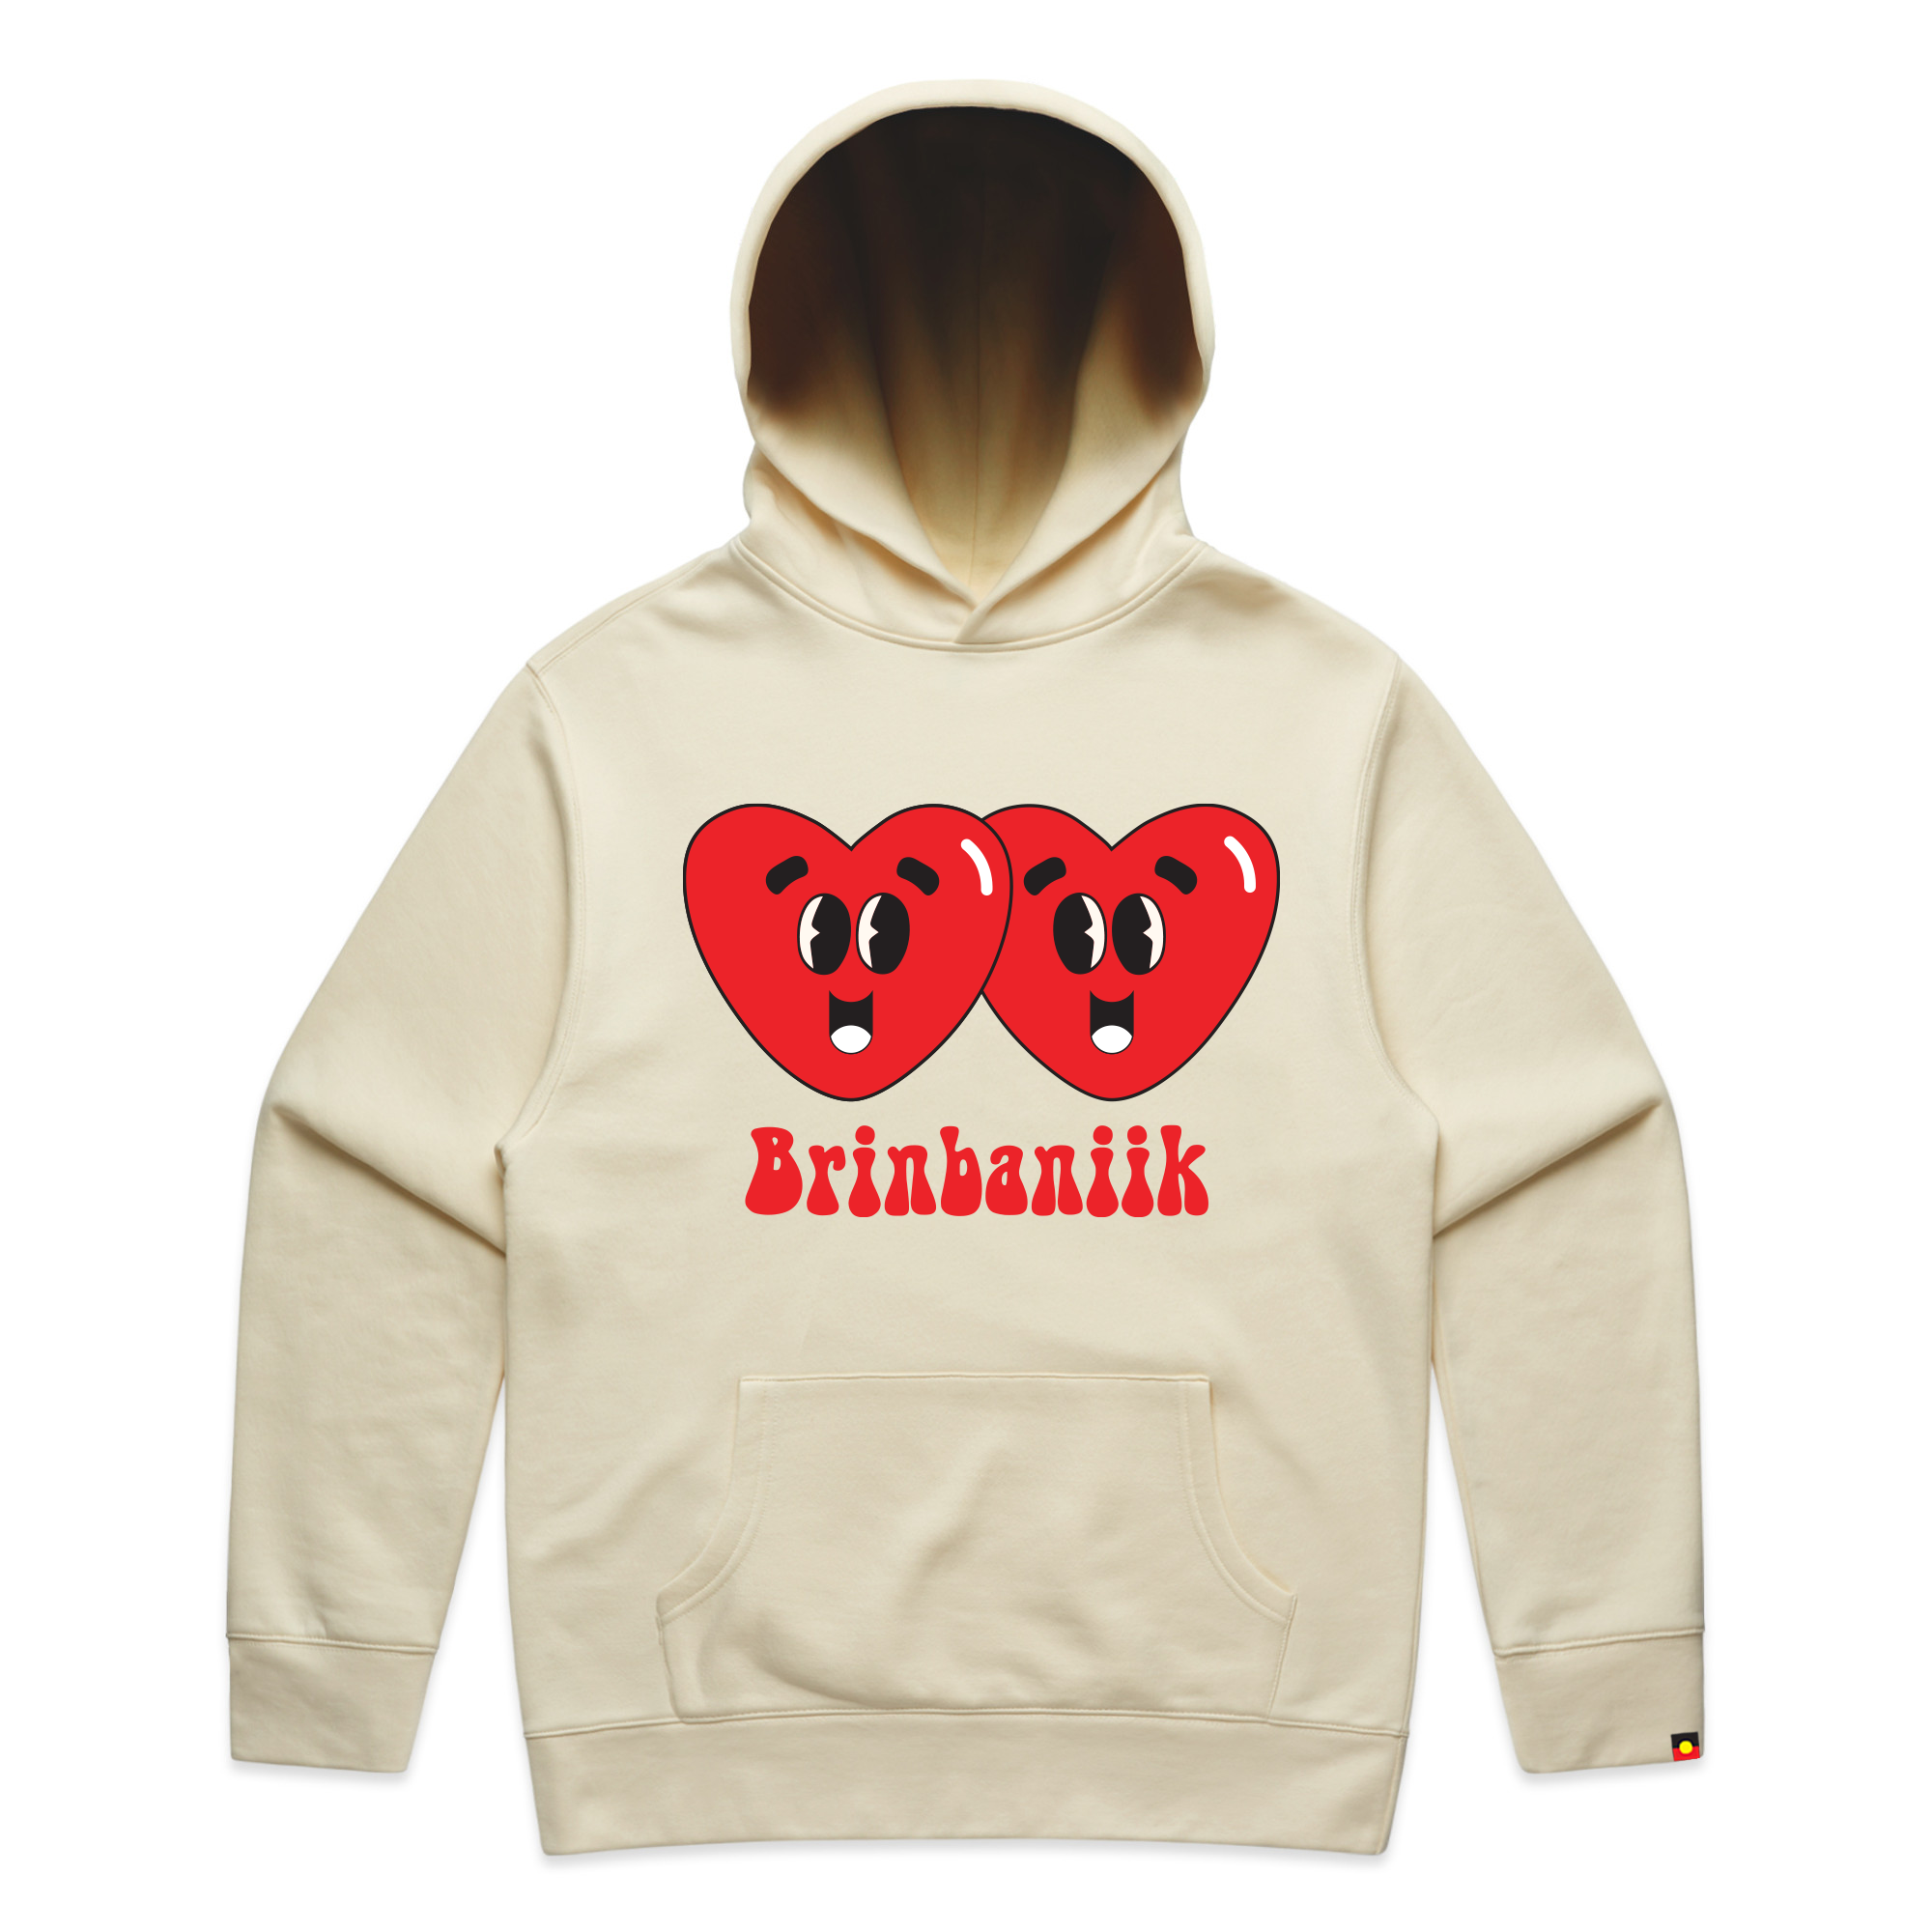 Brinbaniik hoodie